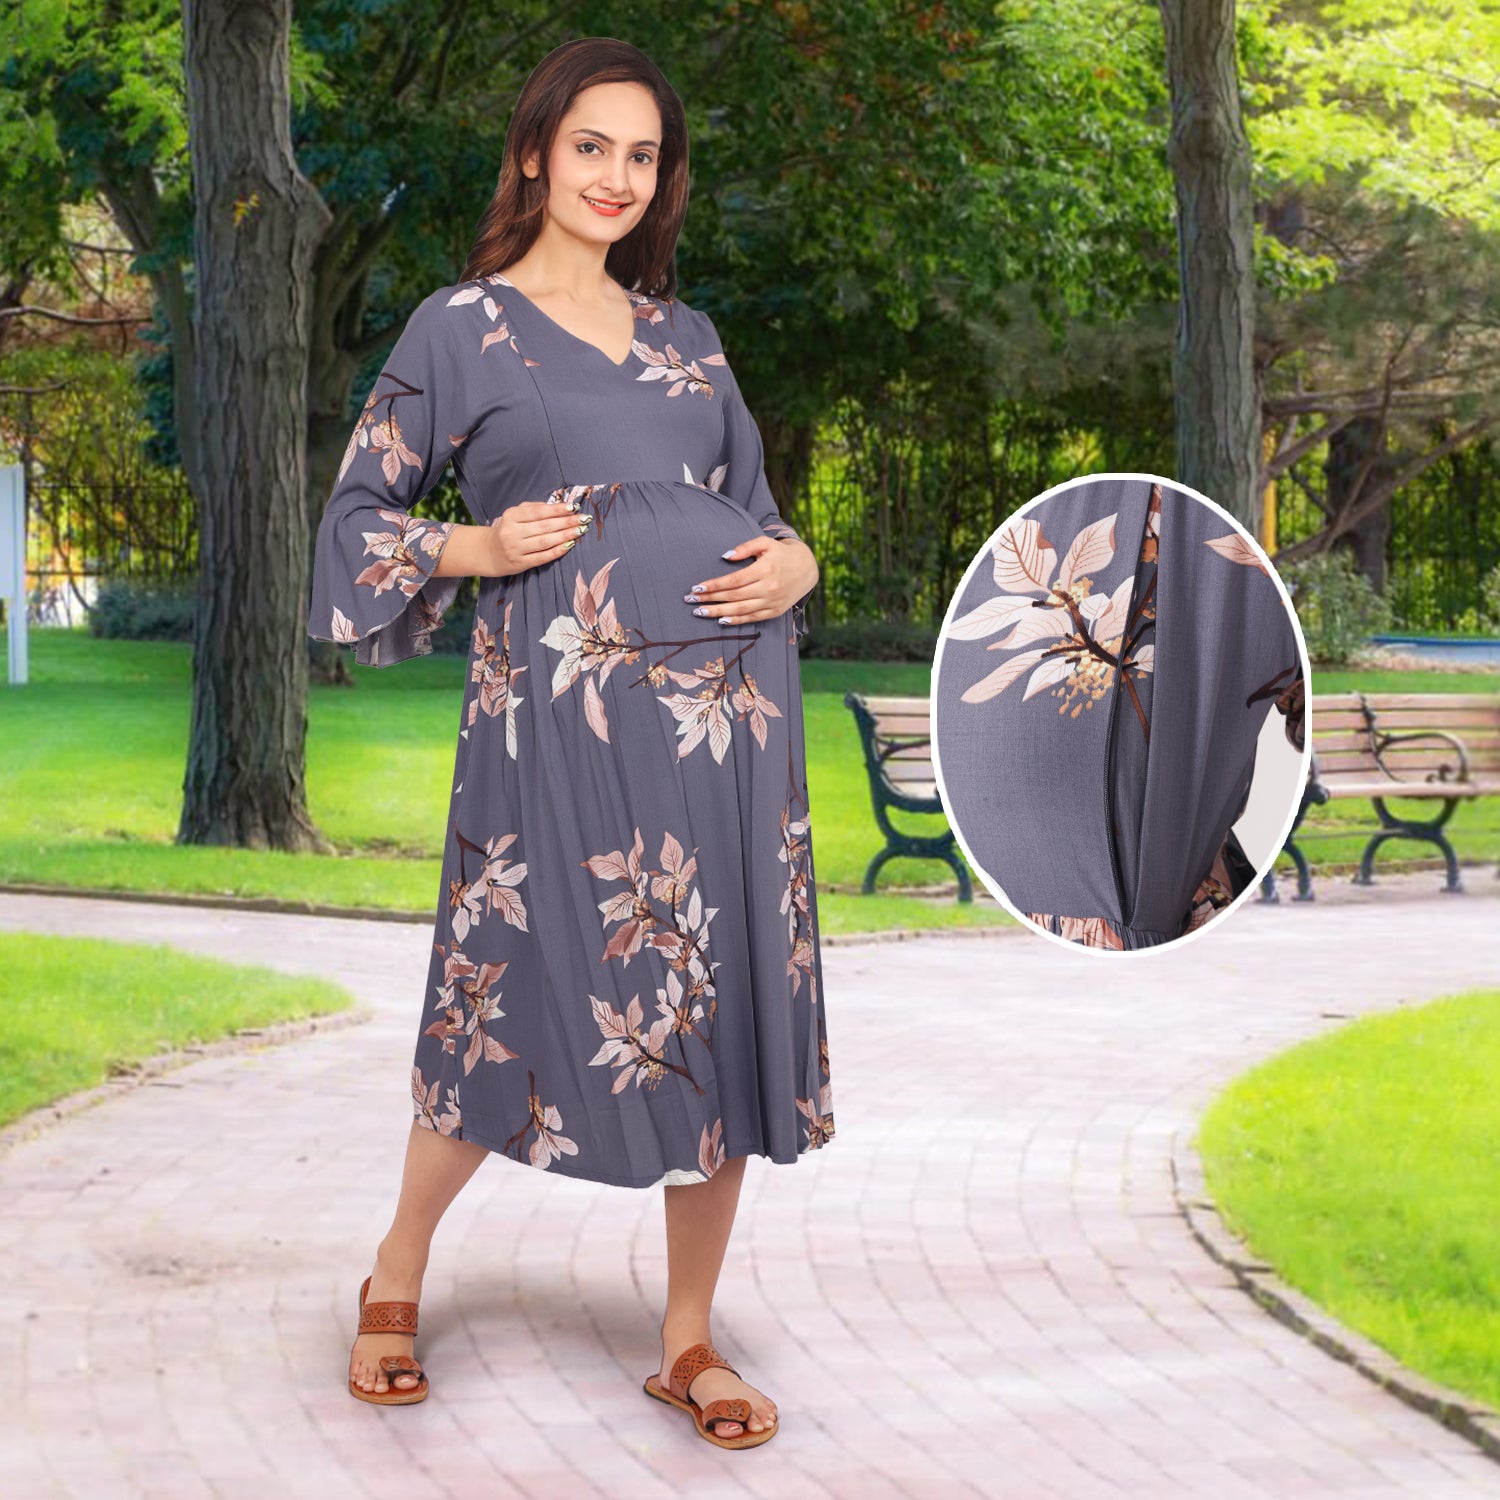 Baby Moo Half Bell Sleeves Comfortable Nursing And Maternity Dress Flower Print - Grey - Baby Moo